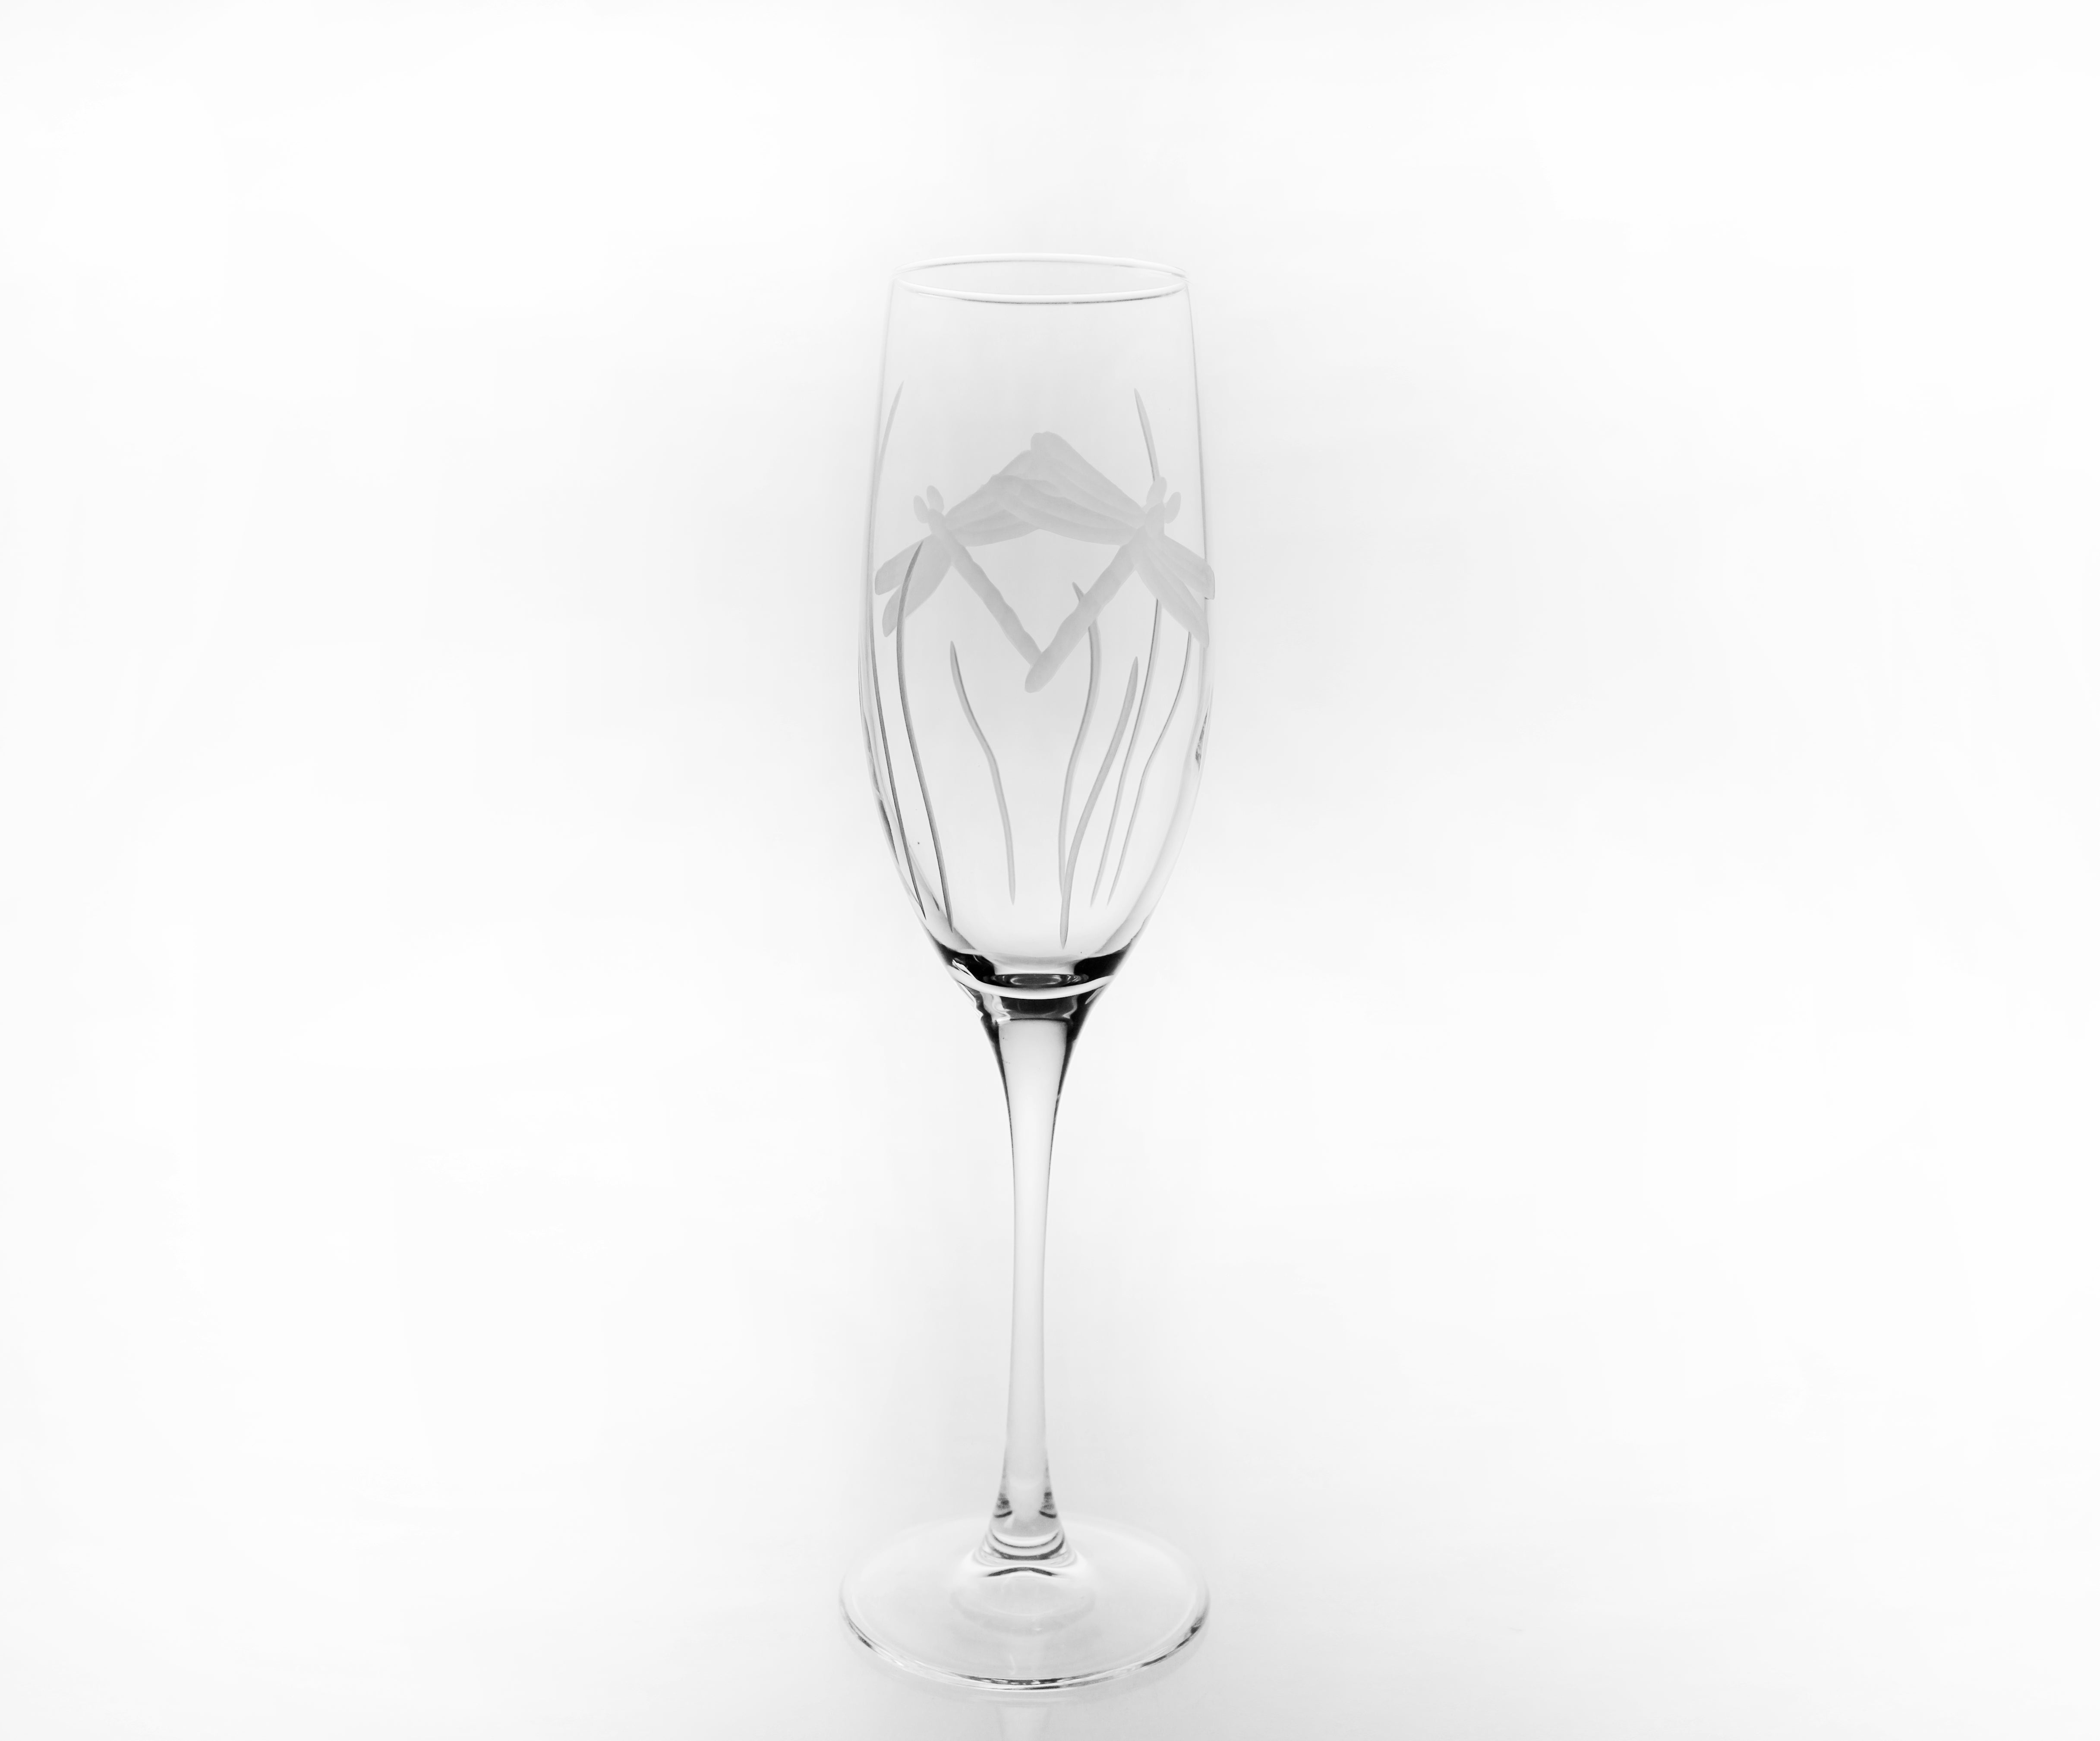 Dragonfly 9oz. Champagne/Prosecco Glasses-Set of 4 - MaisonBeach